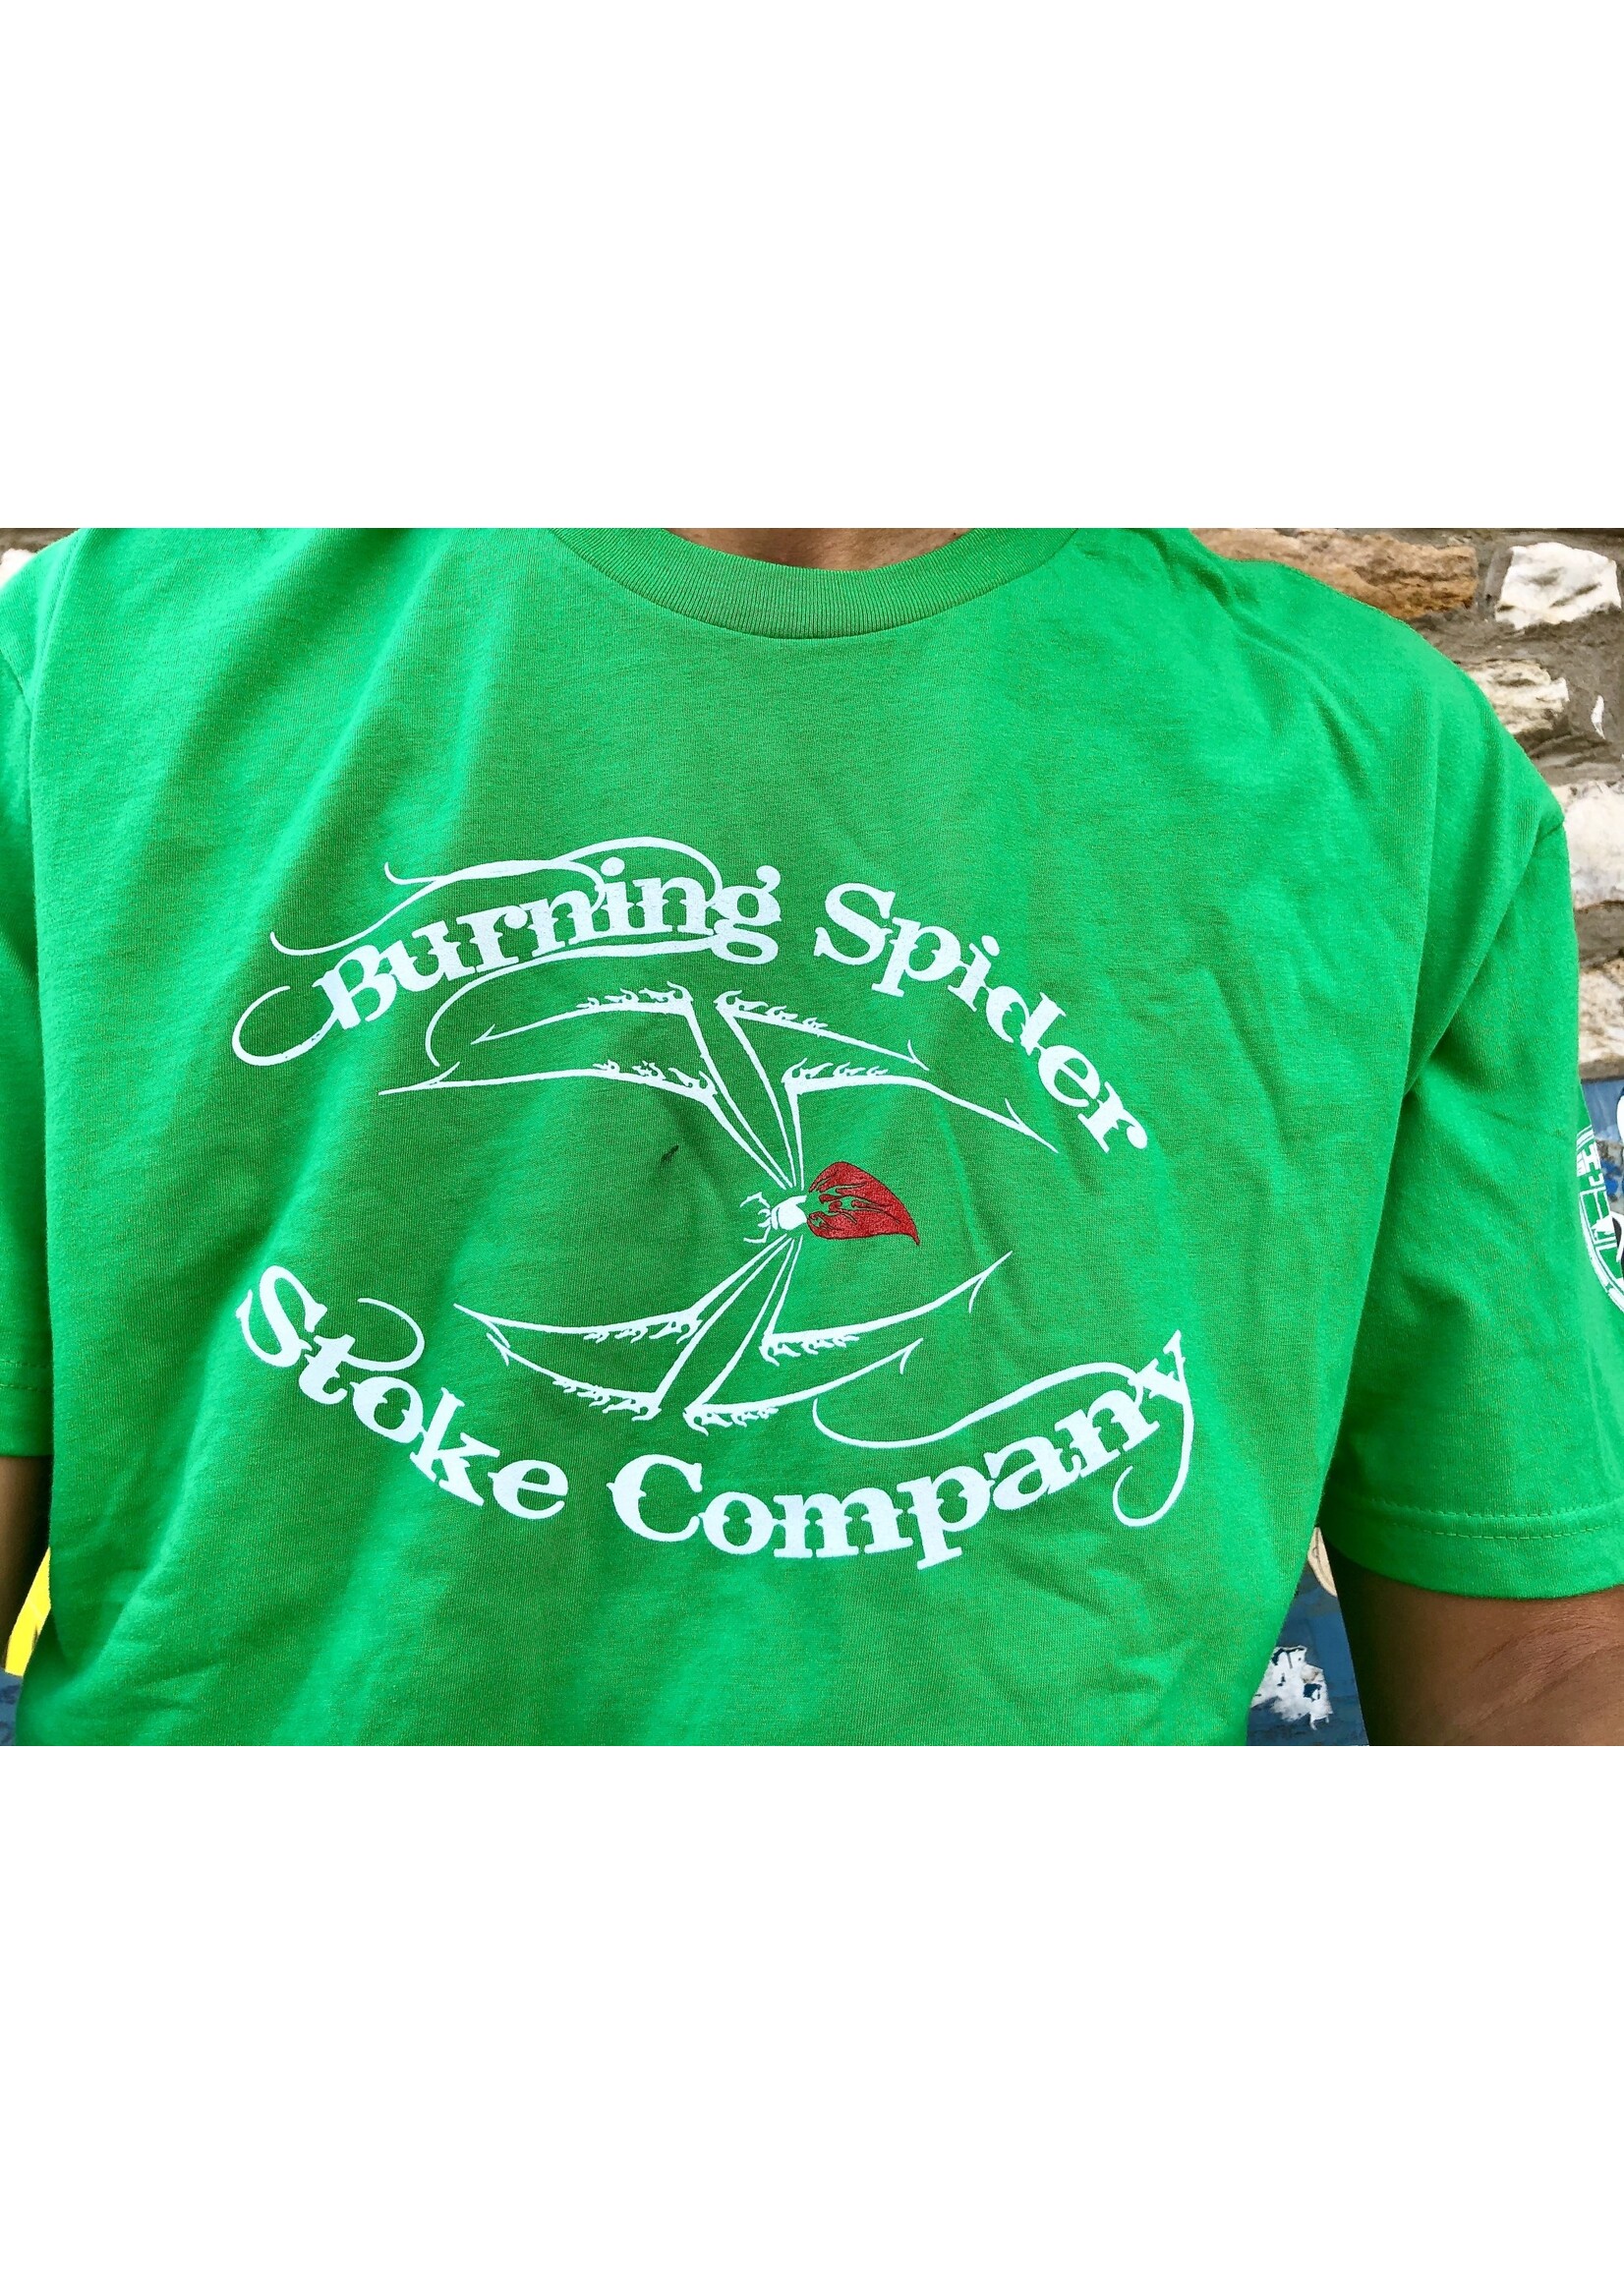 Burning Spider Stoke Company Burning Spider Logo Shirt Green